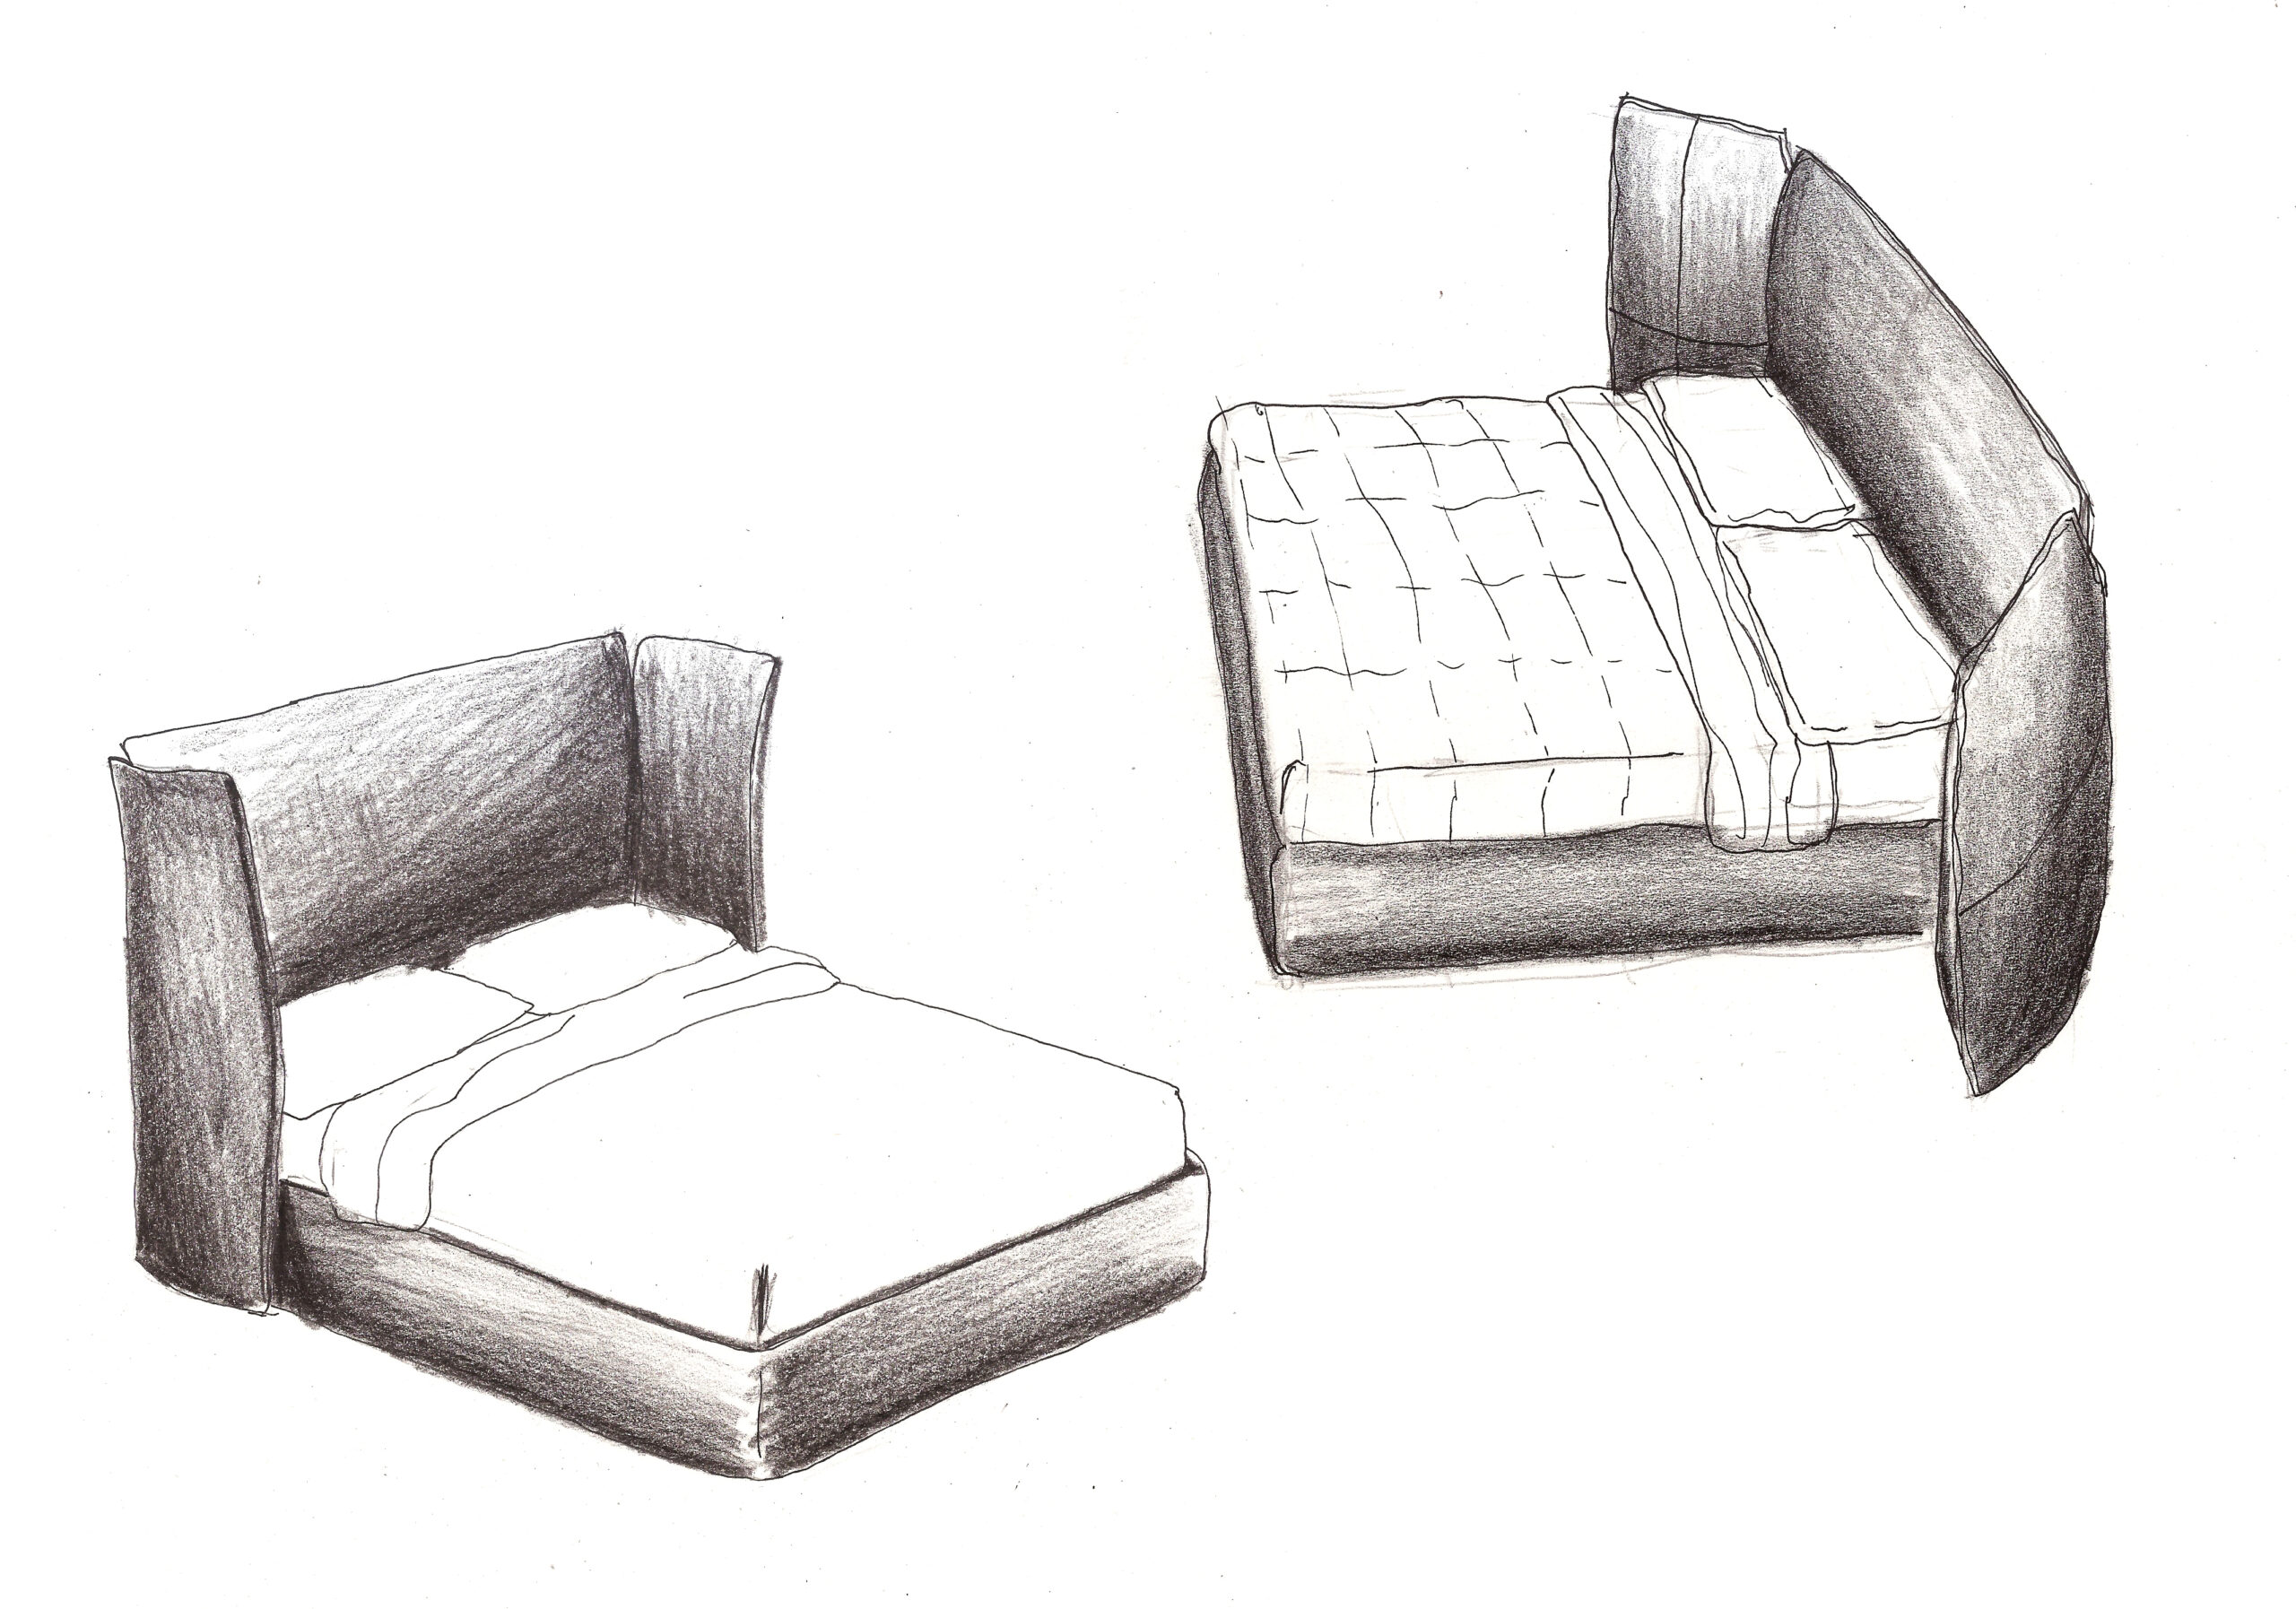 Sketch of Nuvola bed designed by Debiasi Sandri for Schramm